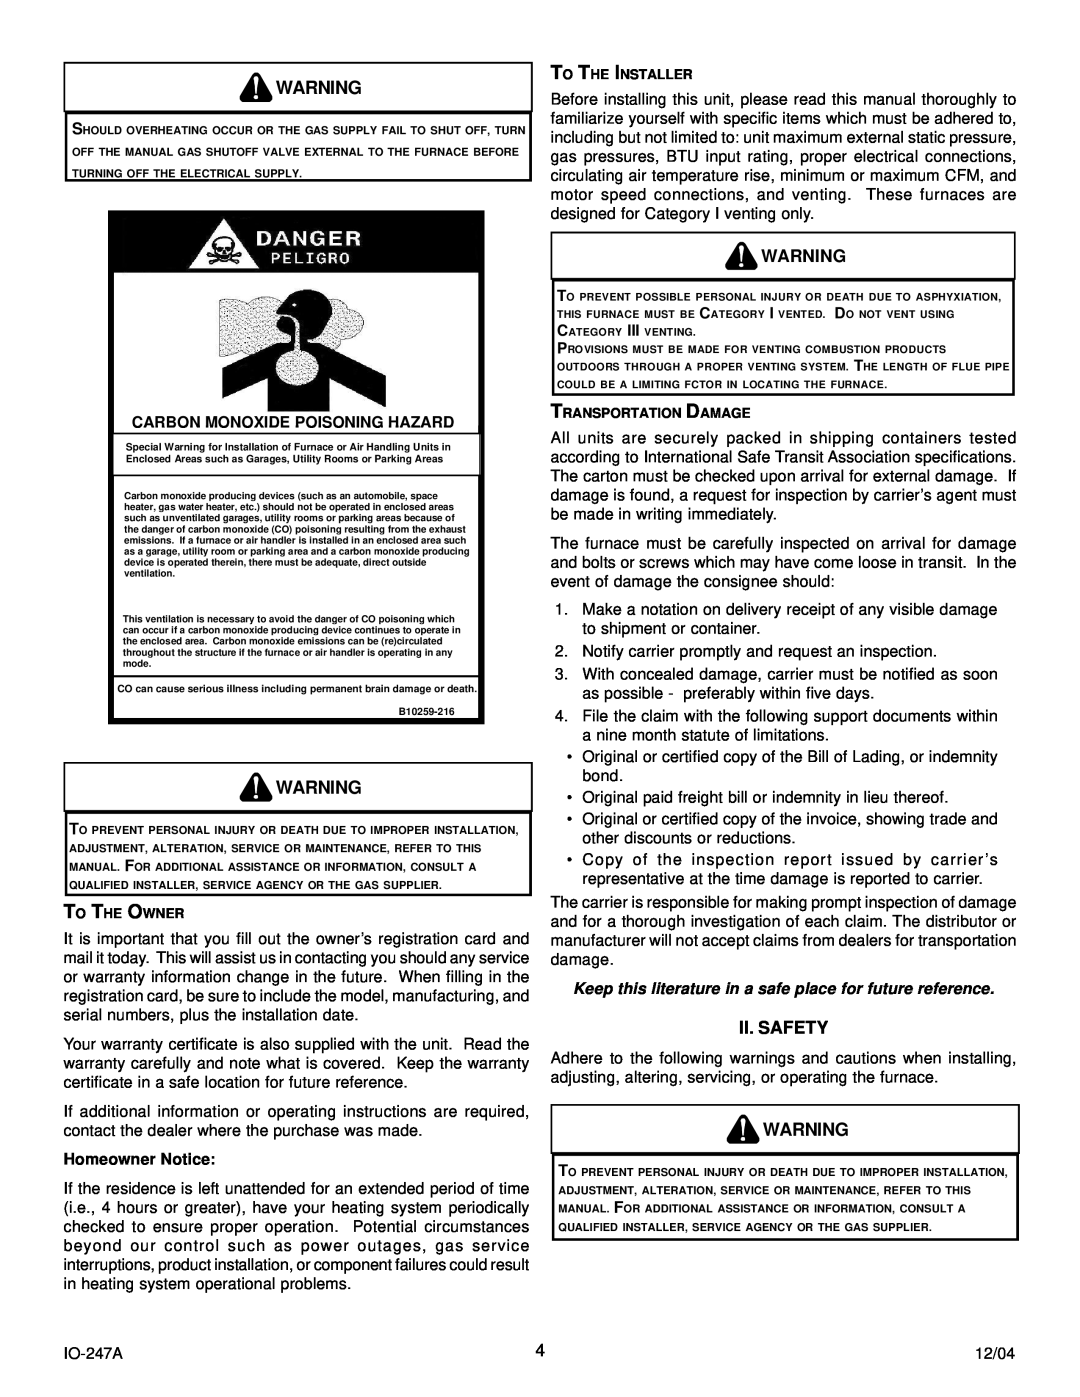 Goodman Mfg AMV8 instruction manual Ii. Safety, Carbon Monoxide Poisoning Hazard, Homeowner Notice 